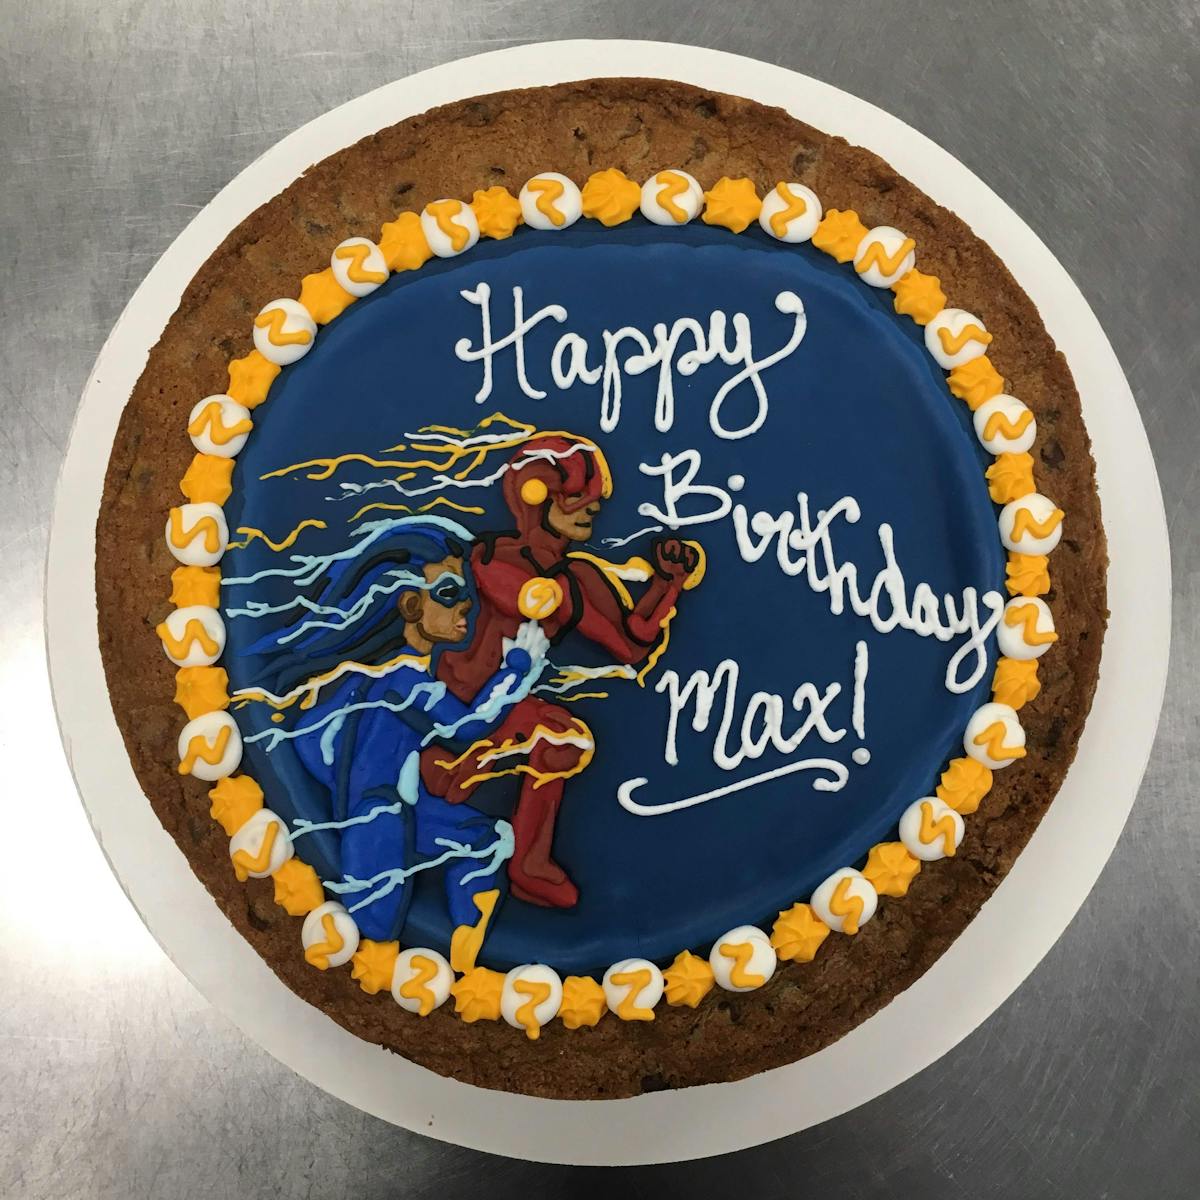 HB Max cake